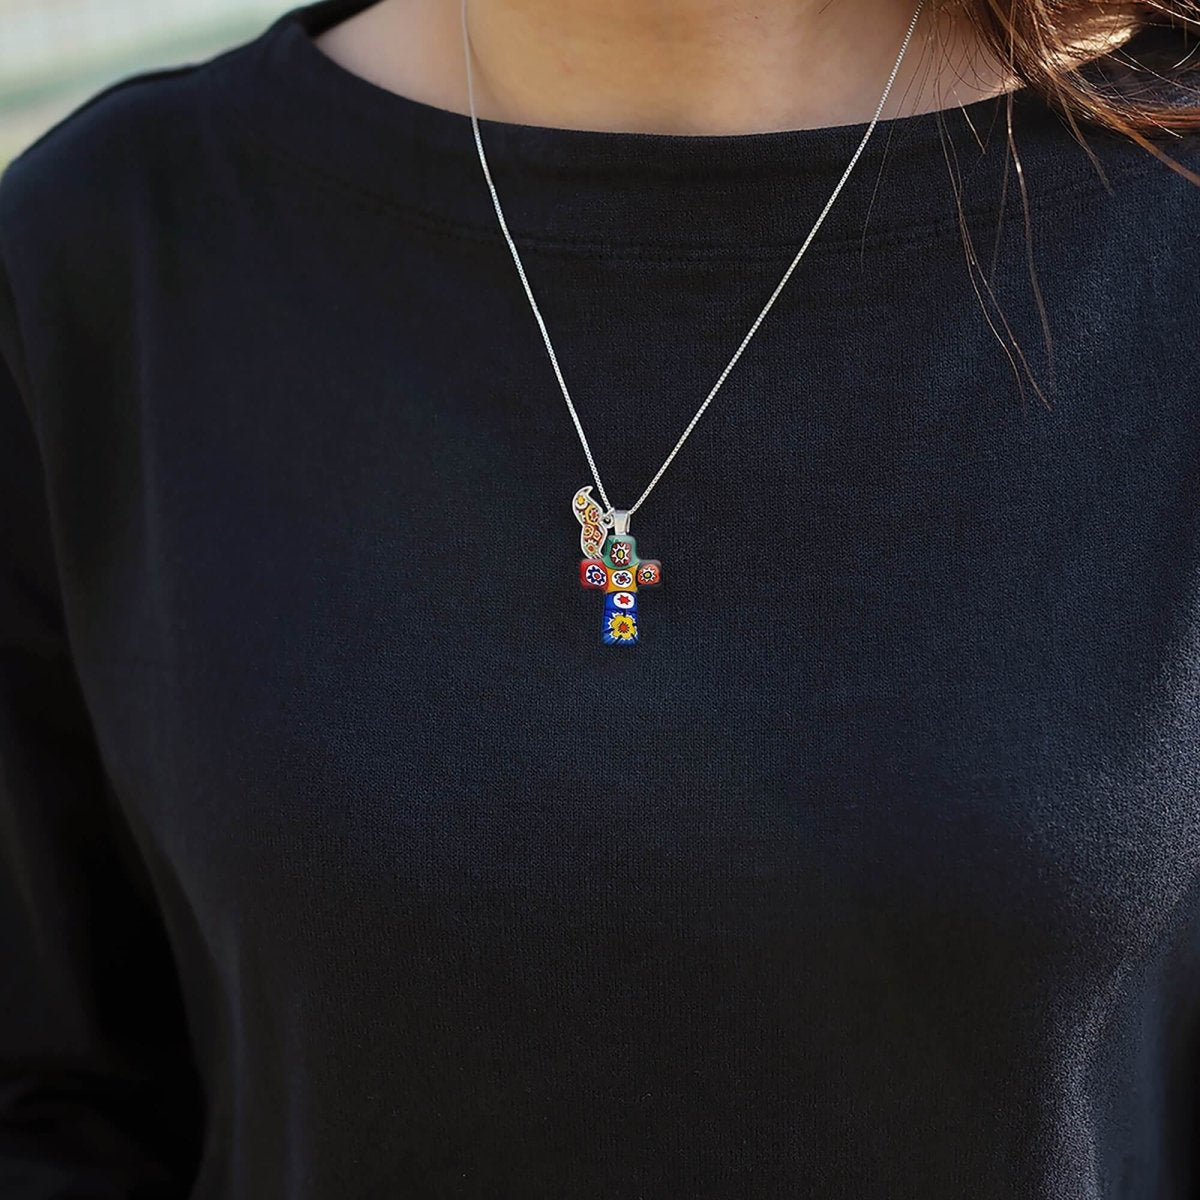 Artylish x Cross 十字架頸鏈 - 彩色 - 吊墜頸鏈